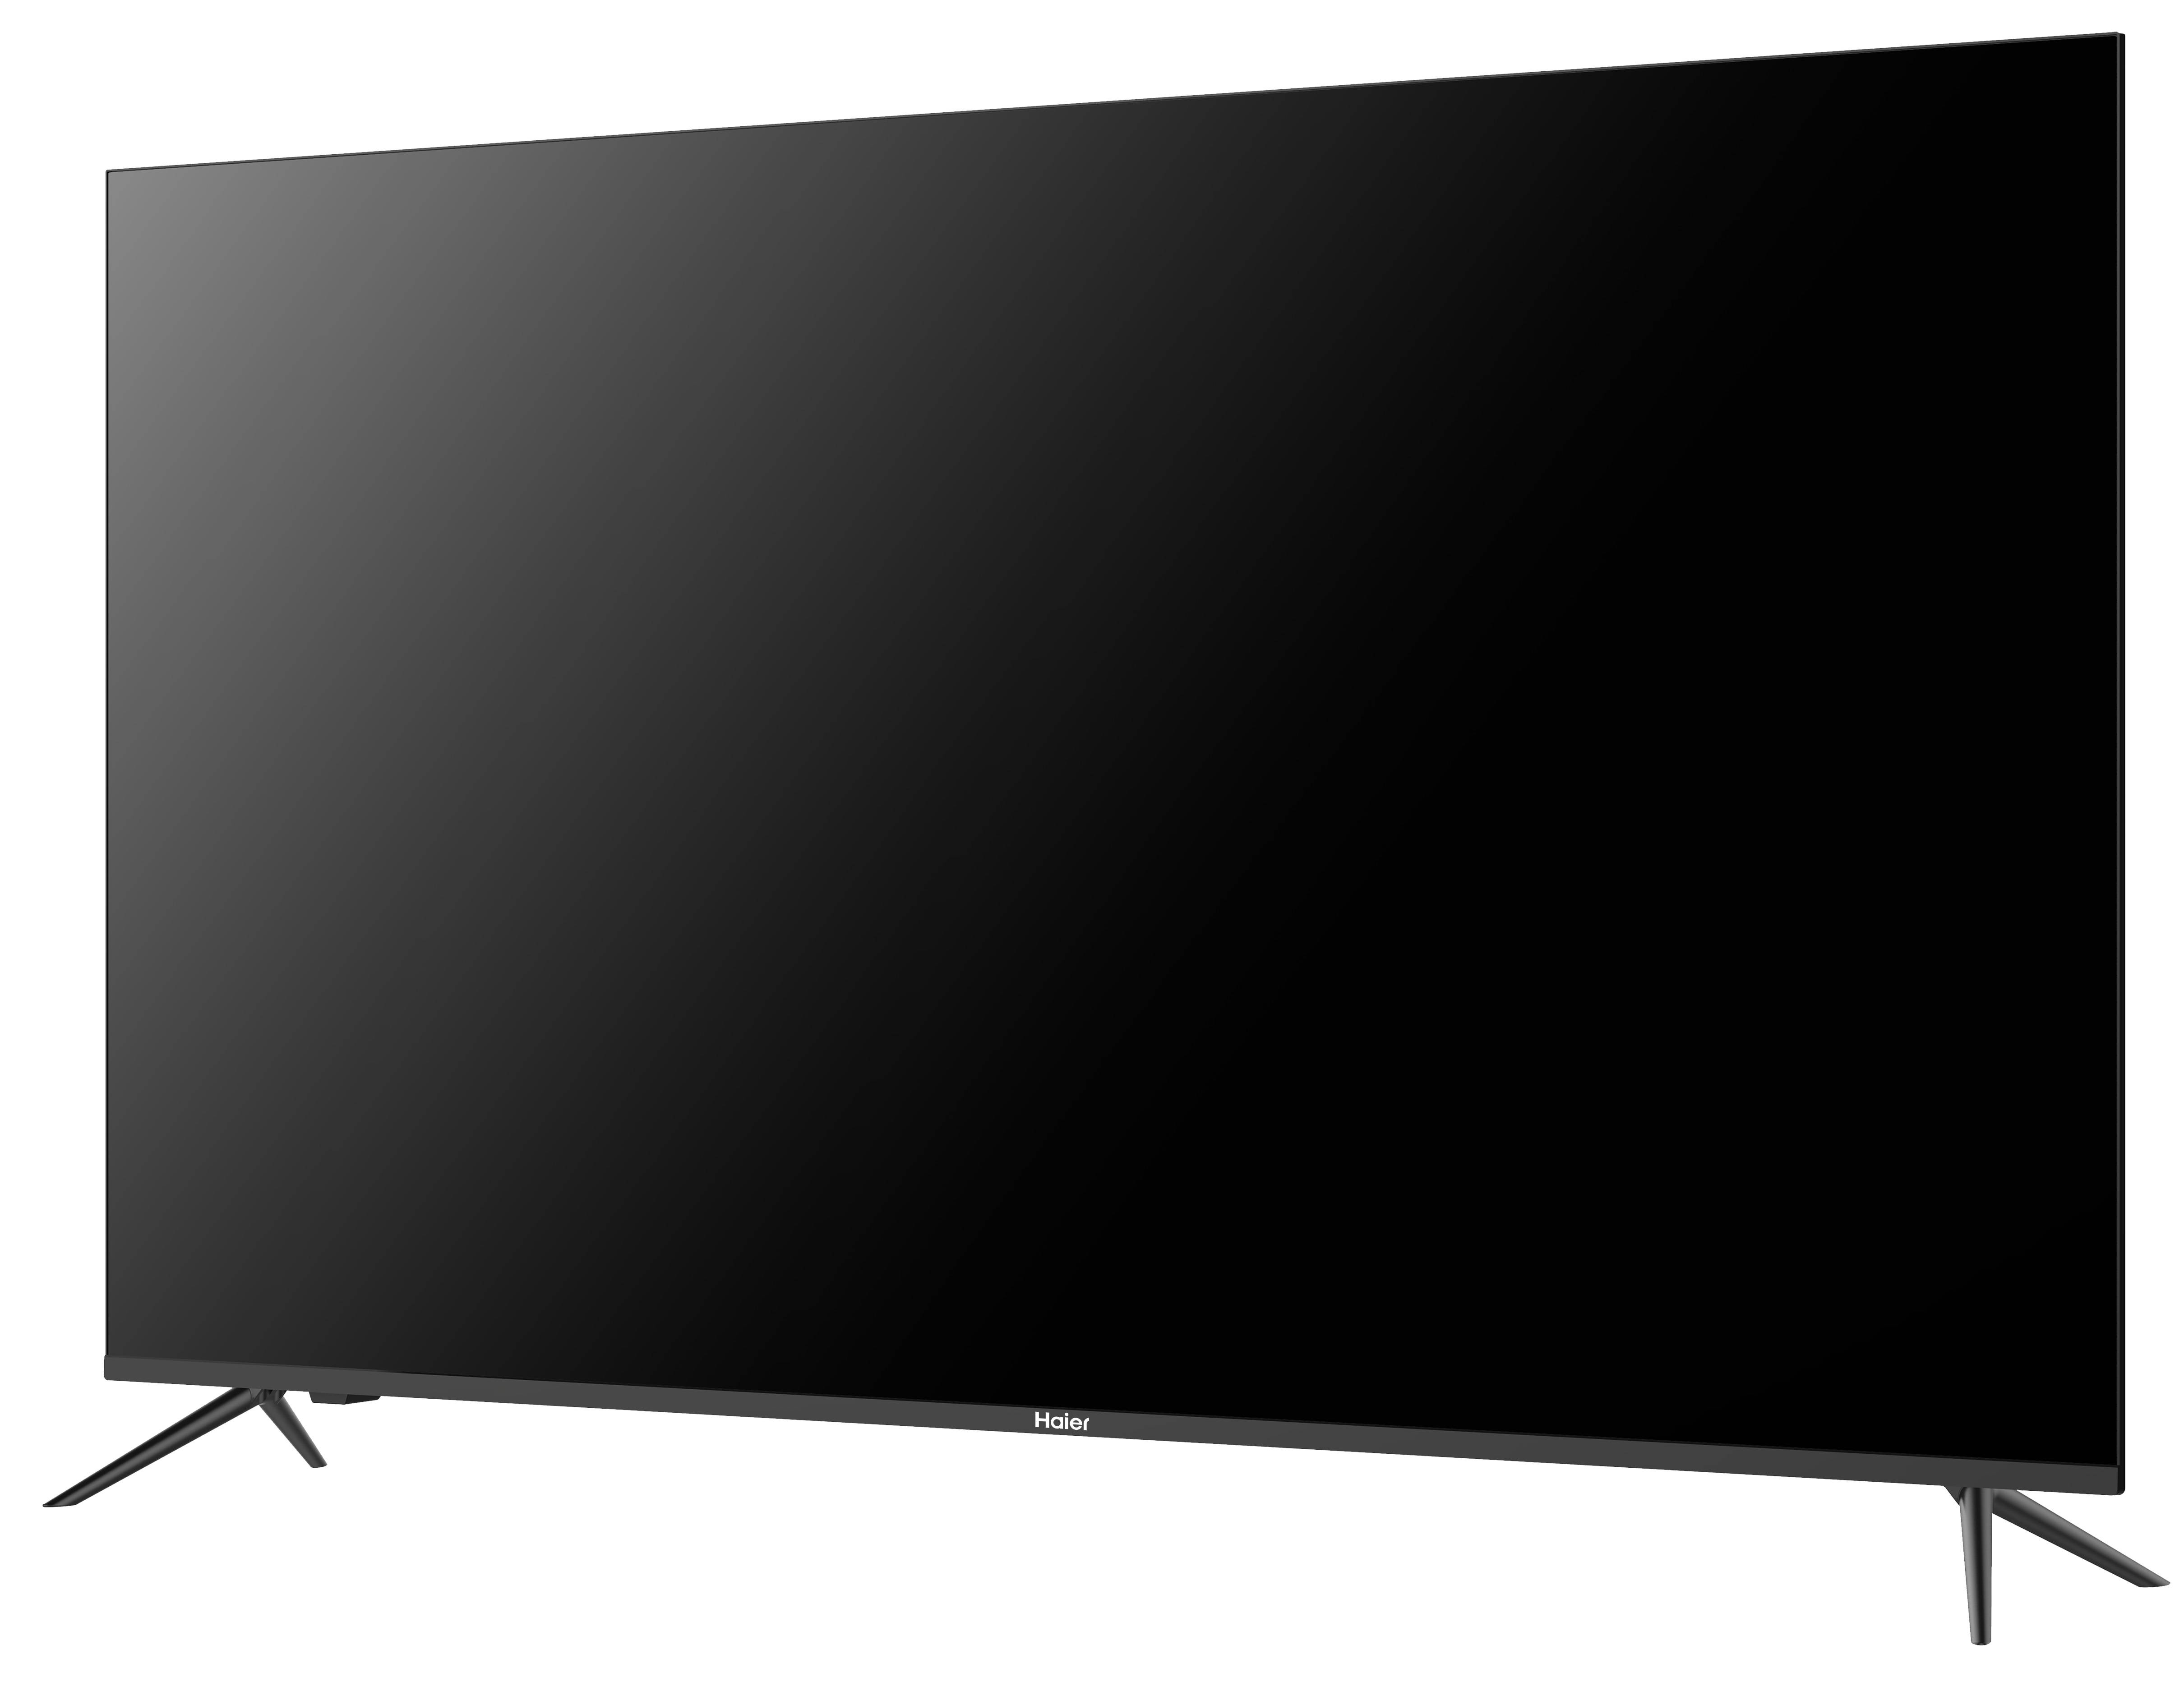 Haier tv s1 43 купить. Телевизор Haier 32 Smart TV MX. Haier 50 Smart TV MX. Телевизор led Haier 75 Smart TV s1 черный 75" (190,5 см). Haier 43 Smart TV s1 led.